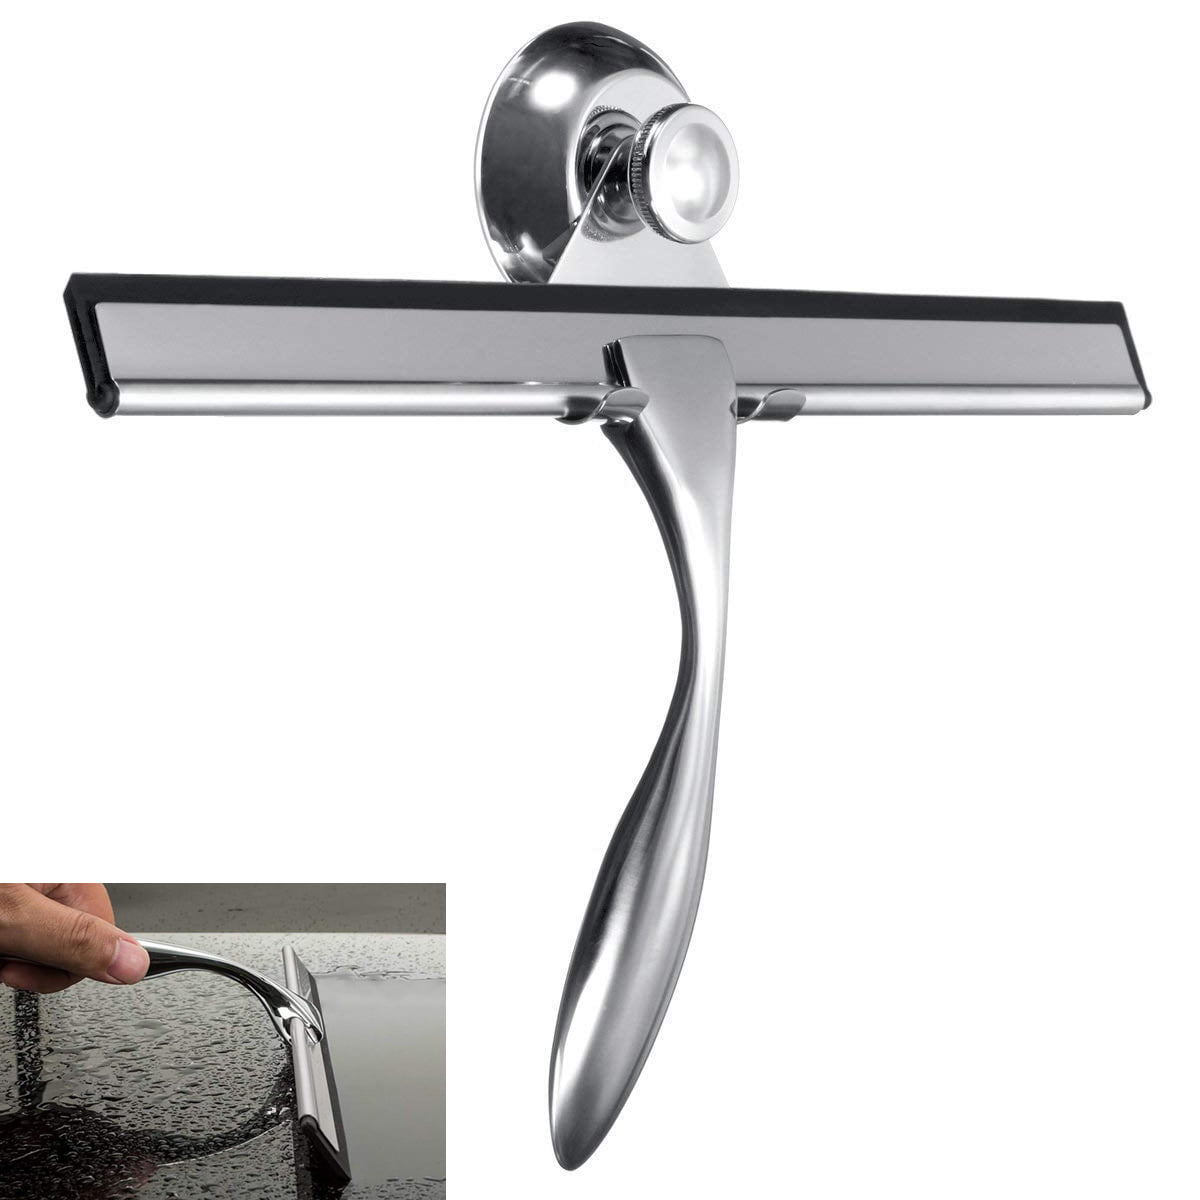 Shower Squeegee Adhesive Holder Hooks - Deluxe Stainless Steel Wiper  Scraper for Bathroom Shower Glass Door, Mirror, Windows, Tiles - Chrome